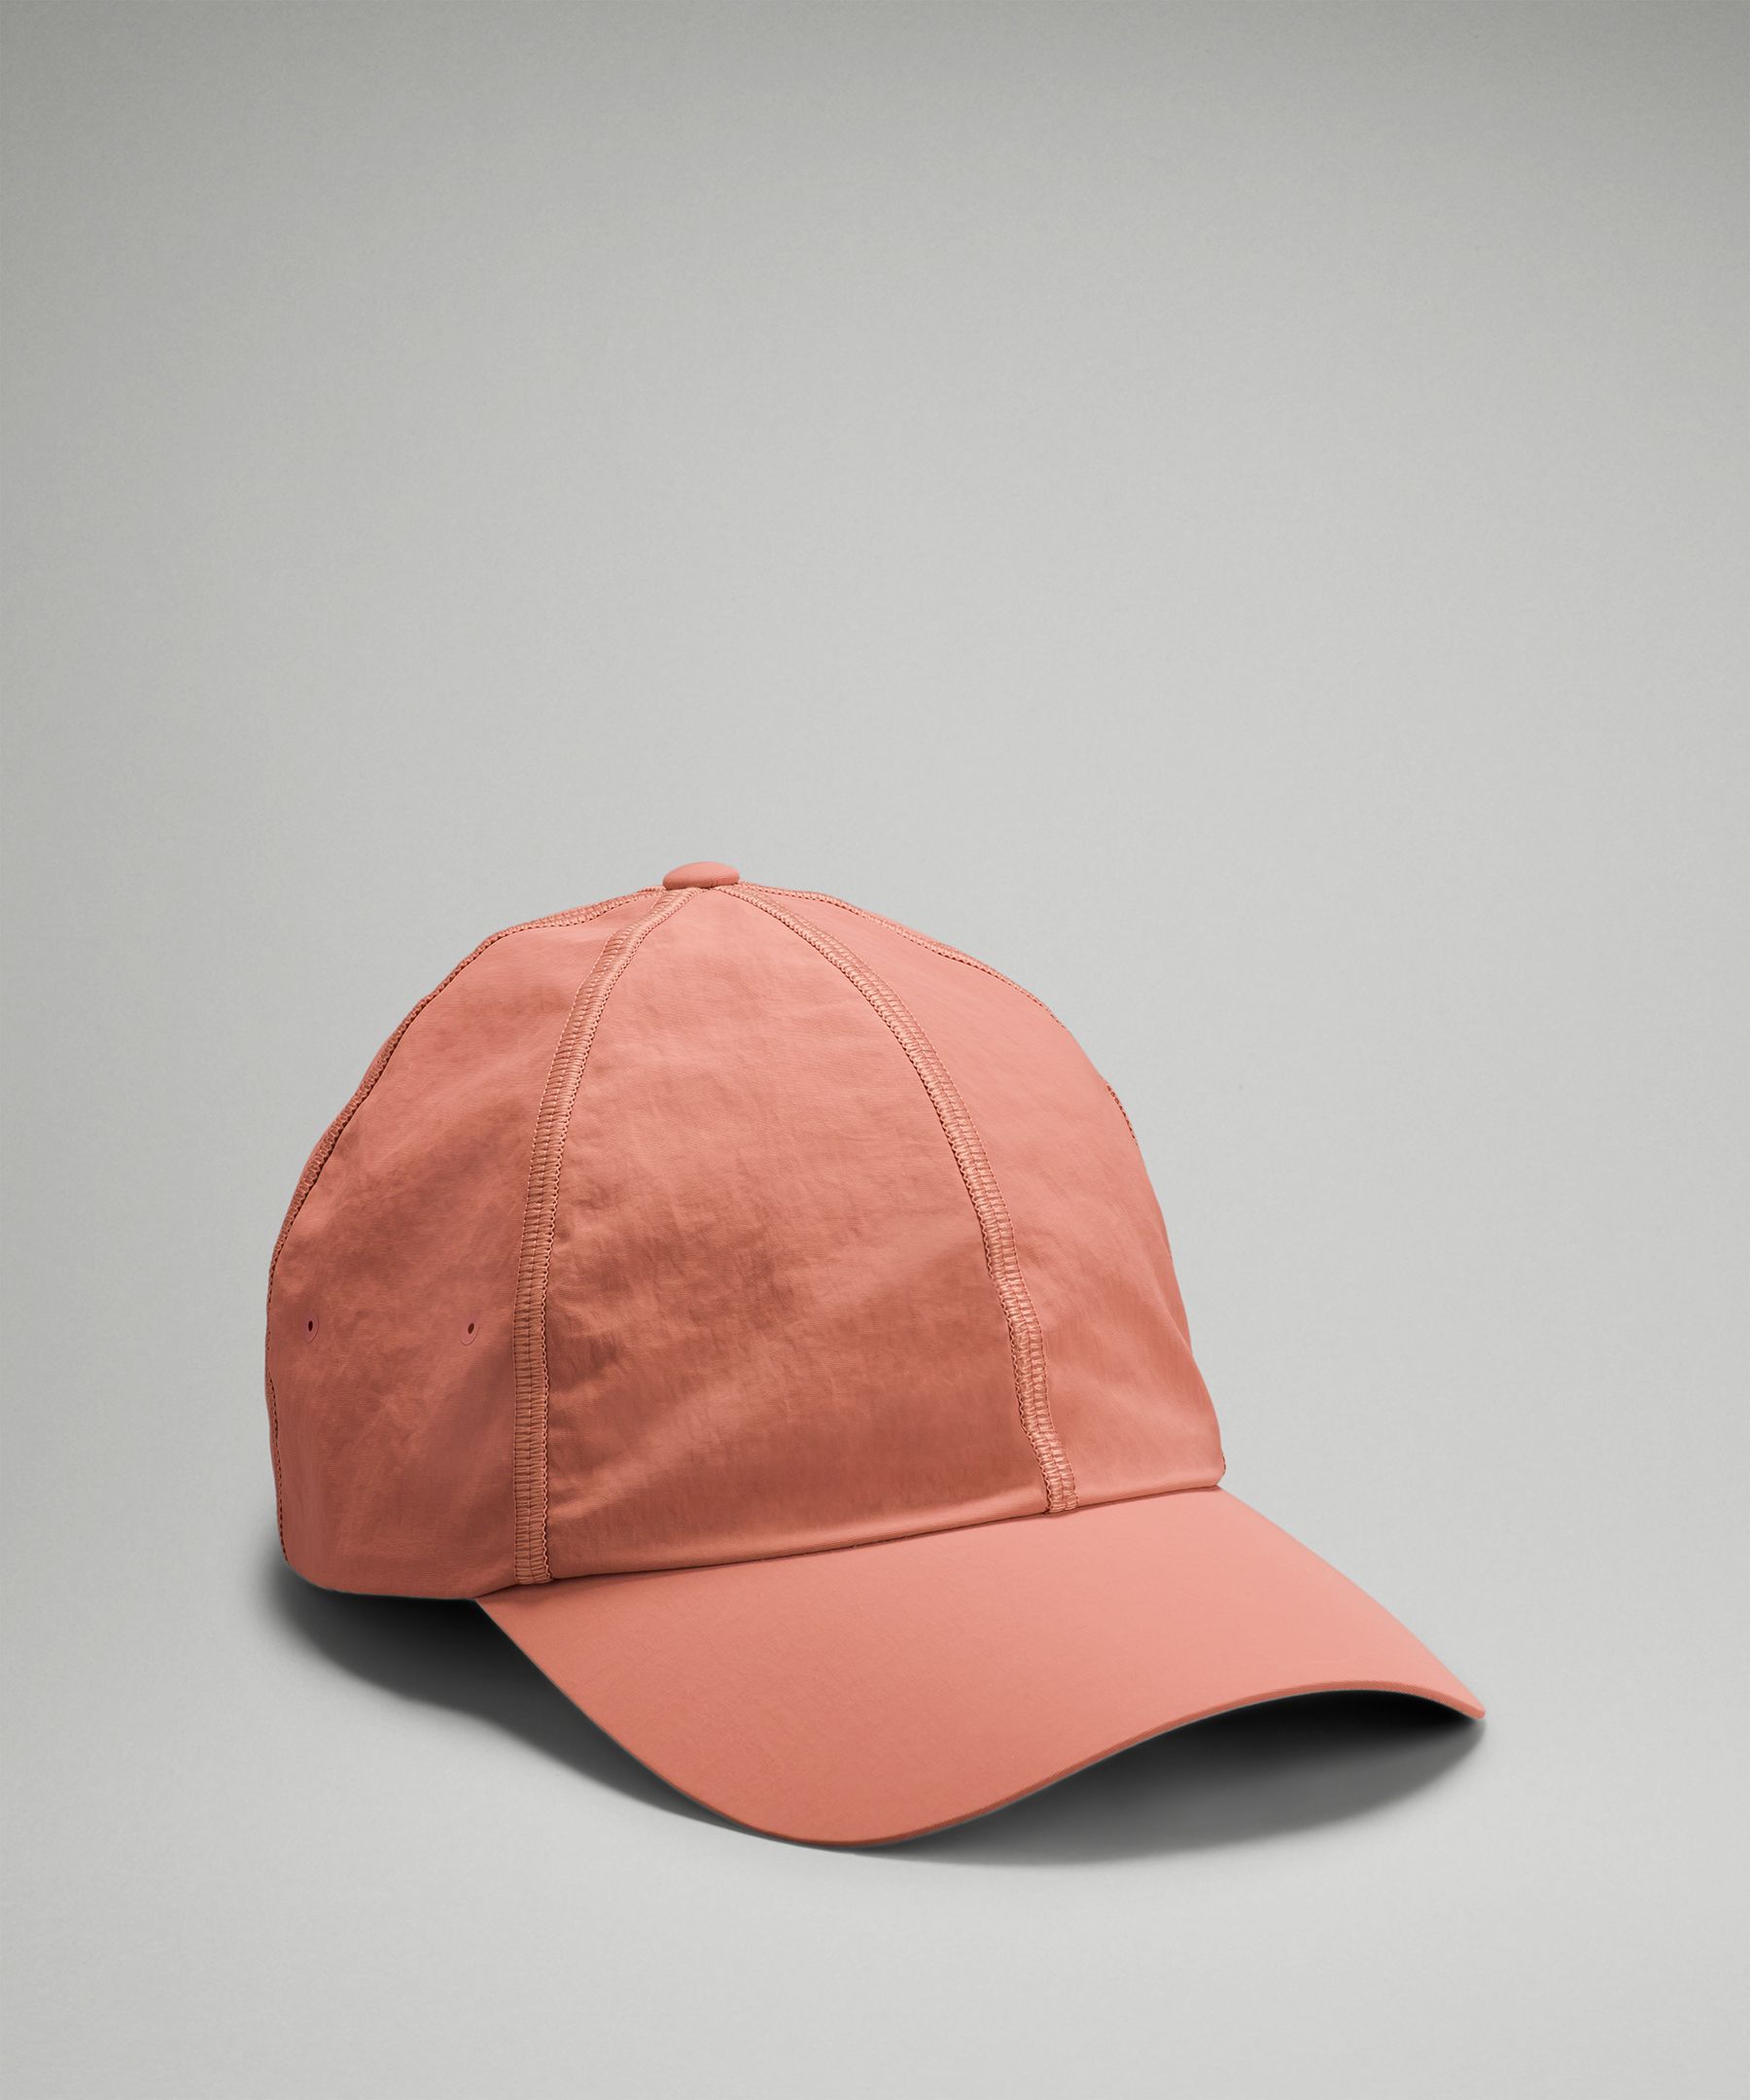 Lululemon Baller Hat Soft In Pink Savannah